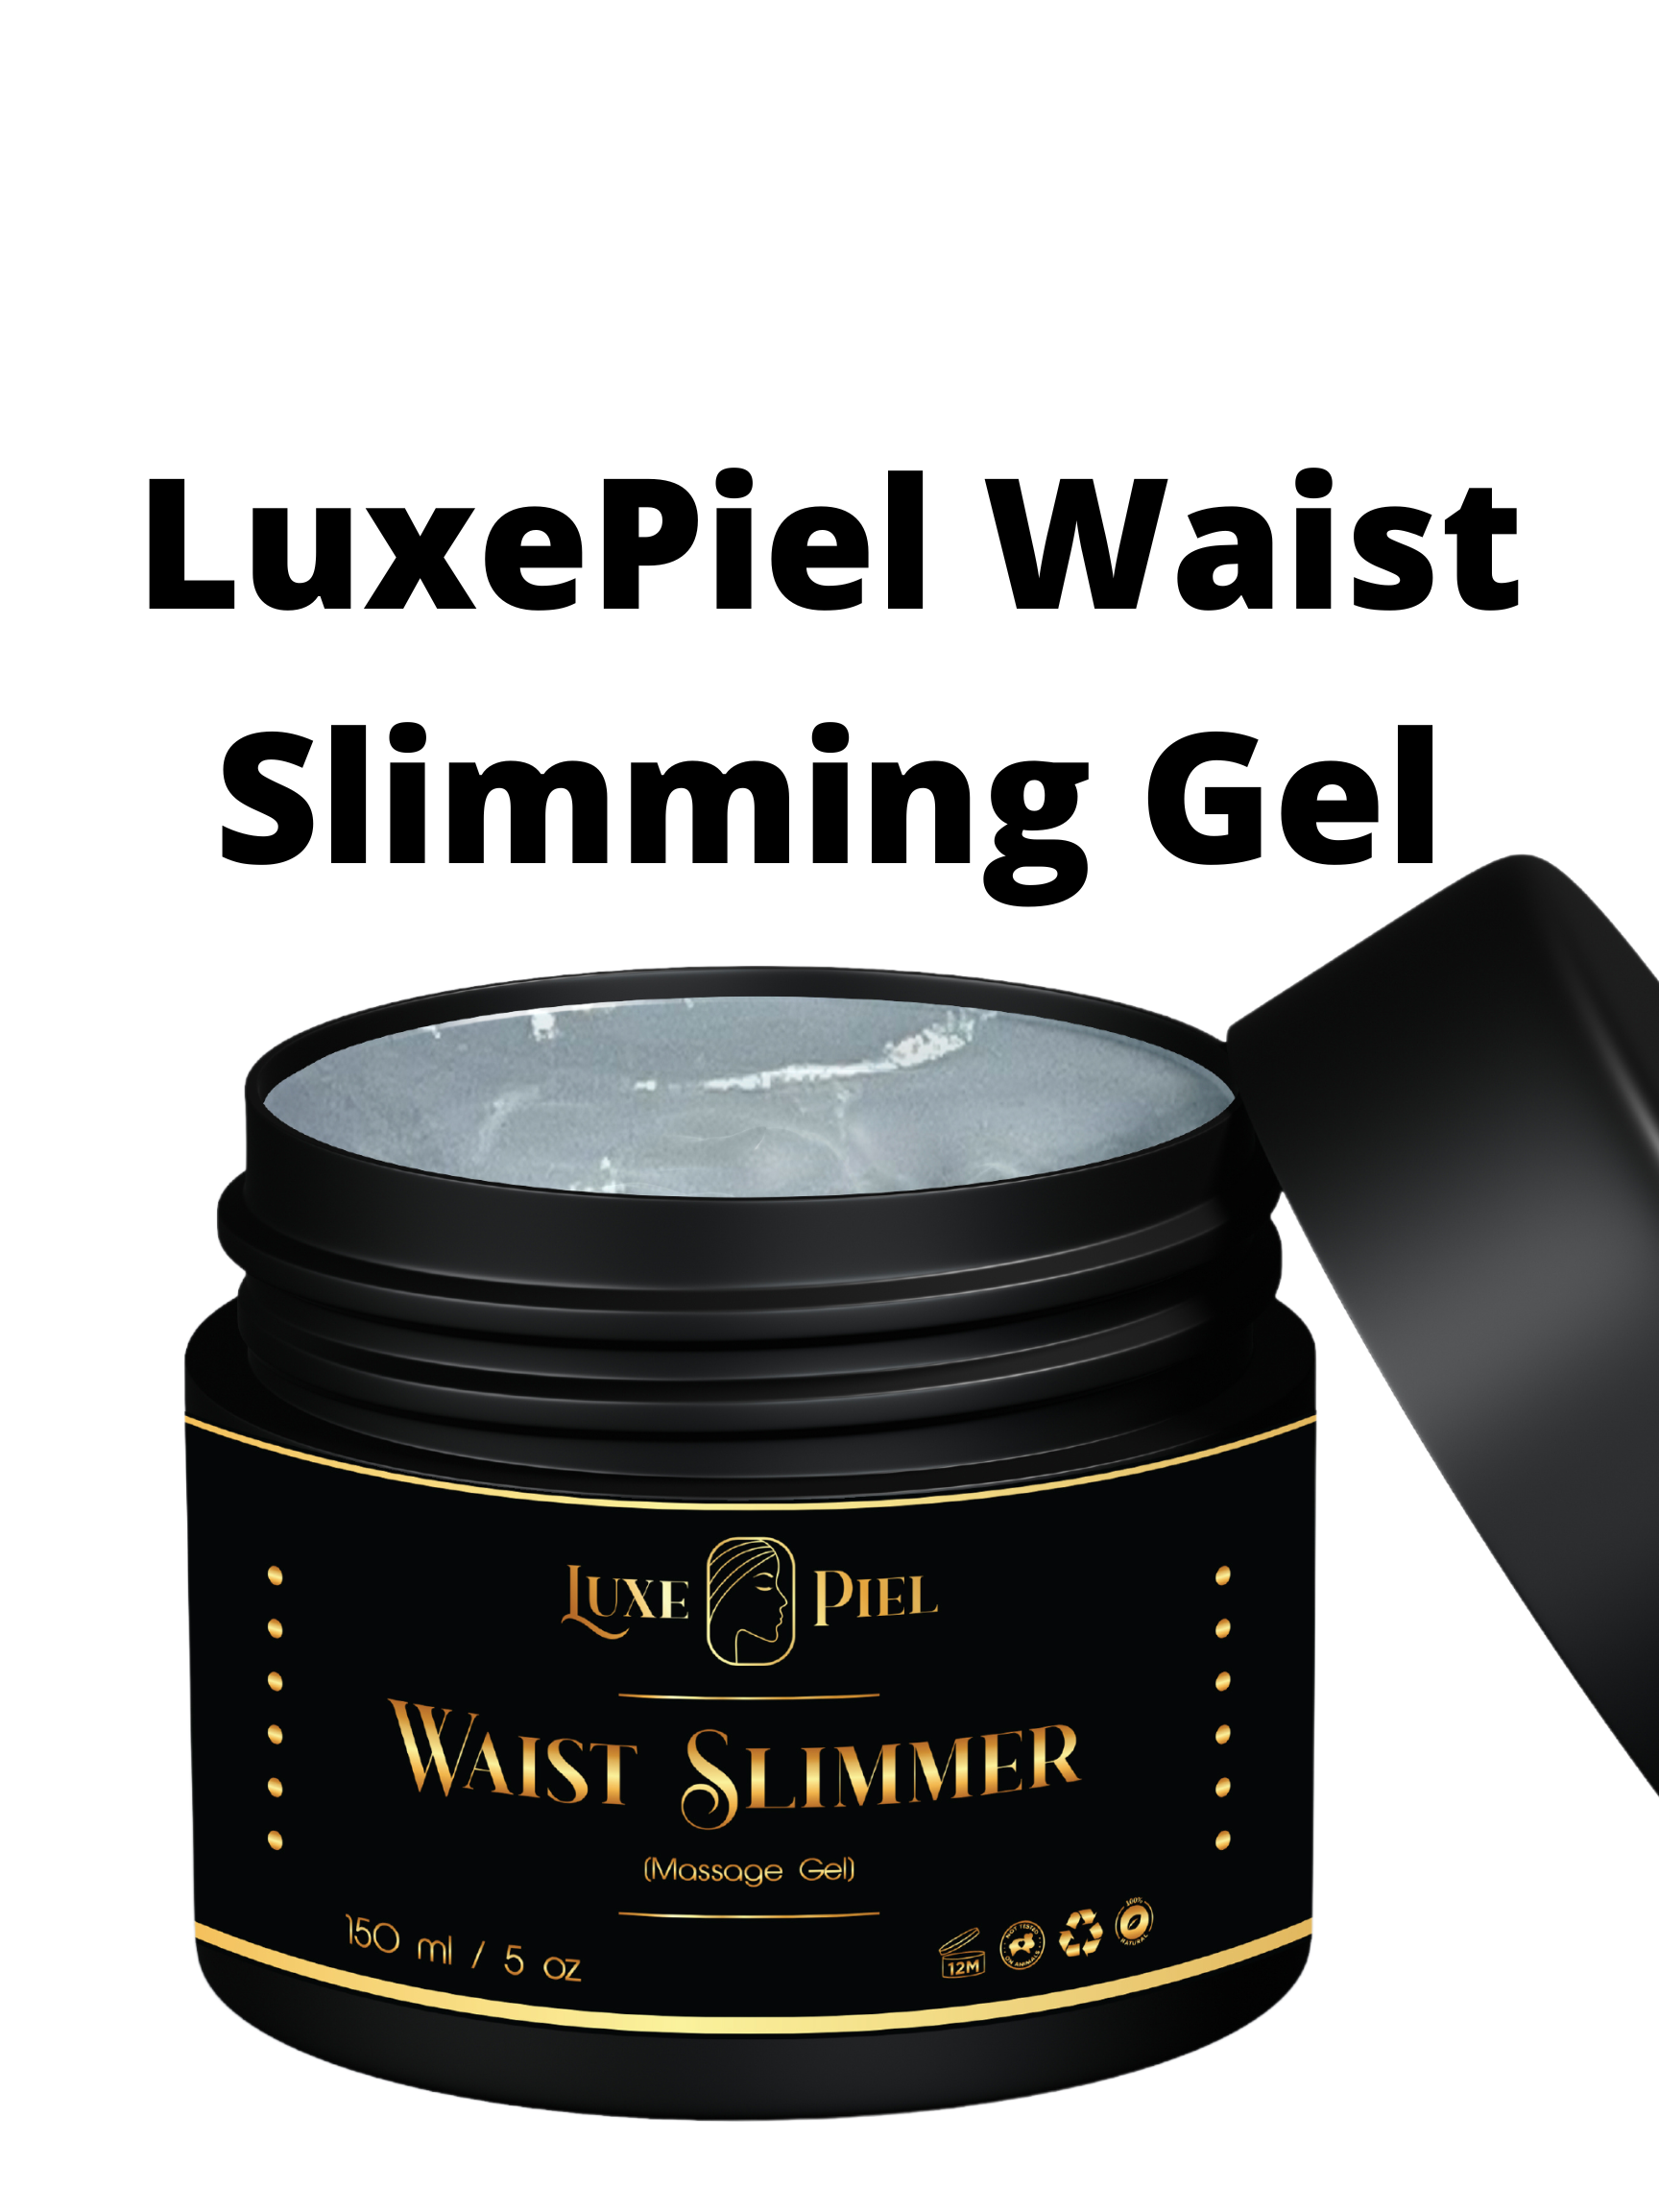 LuxePiel Waist Slimming Gel – Luxe Piel